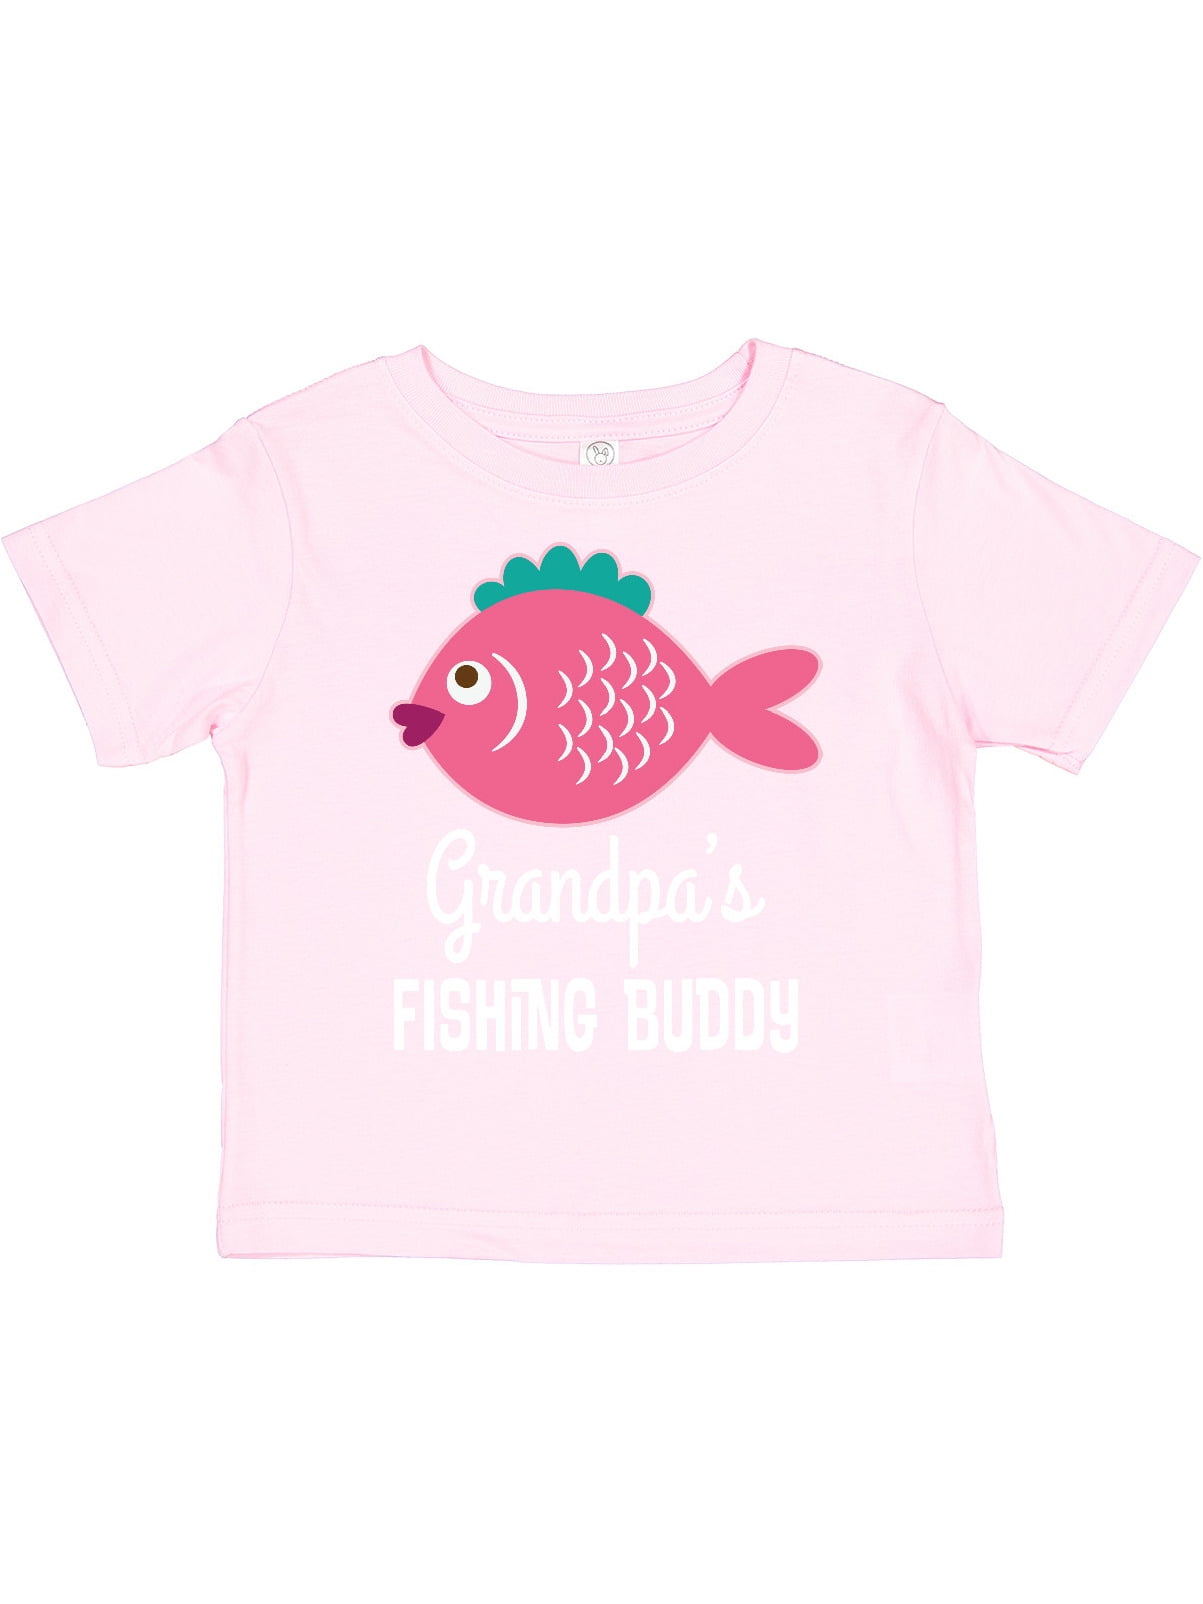 Inktastic Grandpa Fishing Buddy Girls Fish Youth T-Shirt